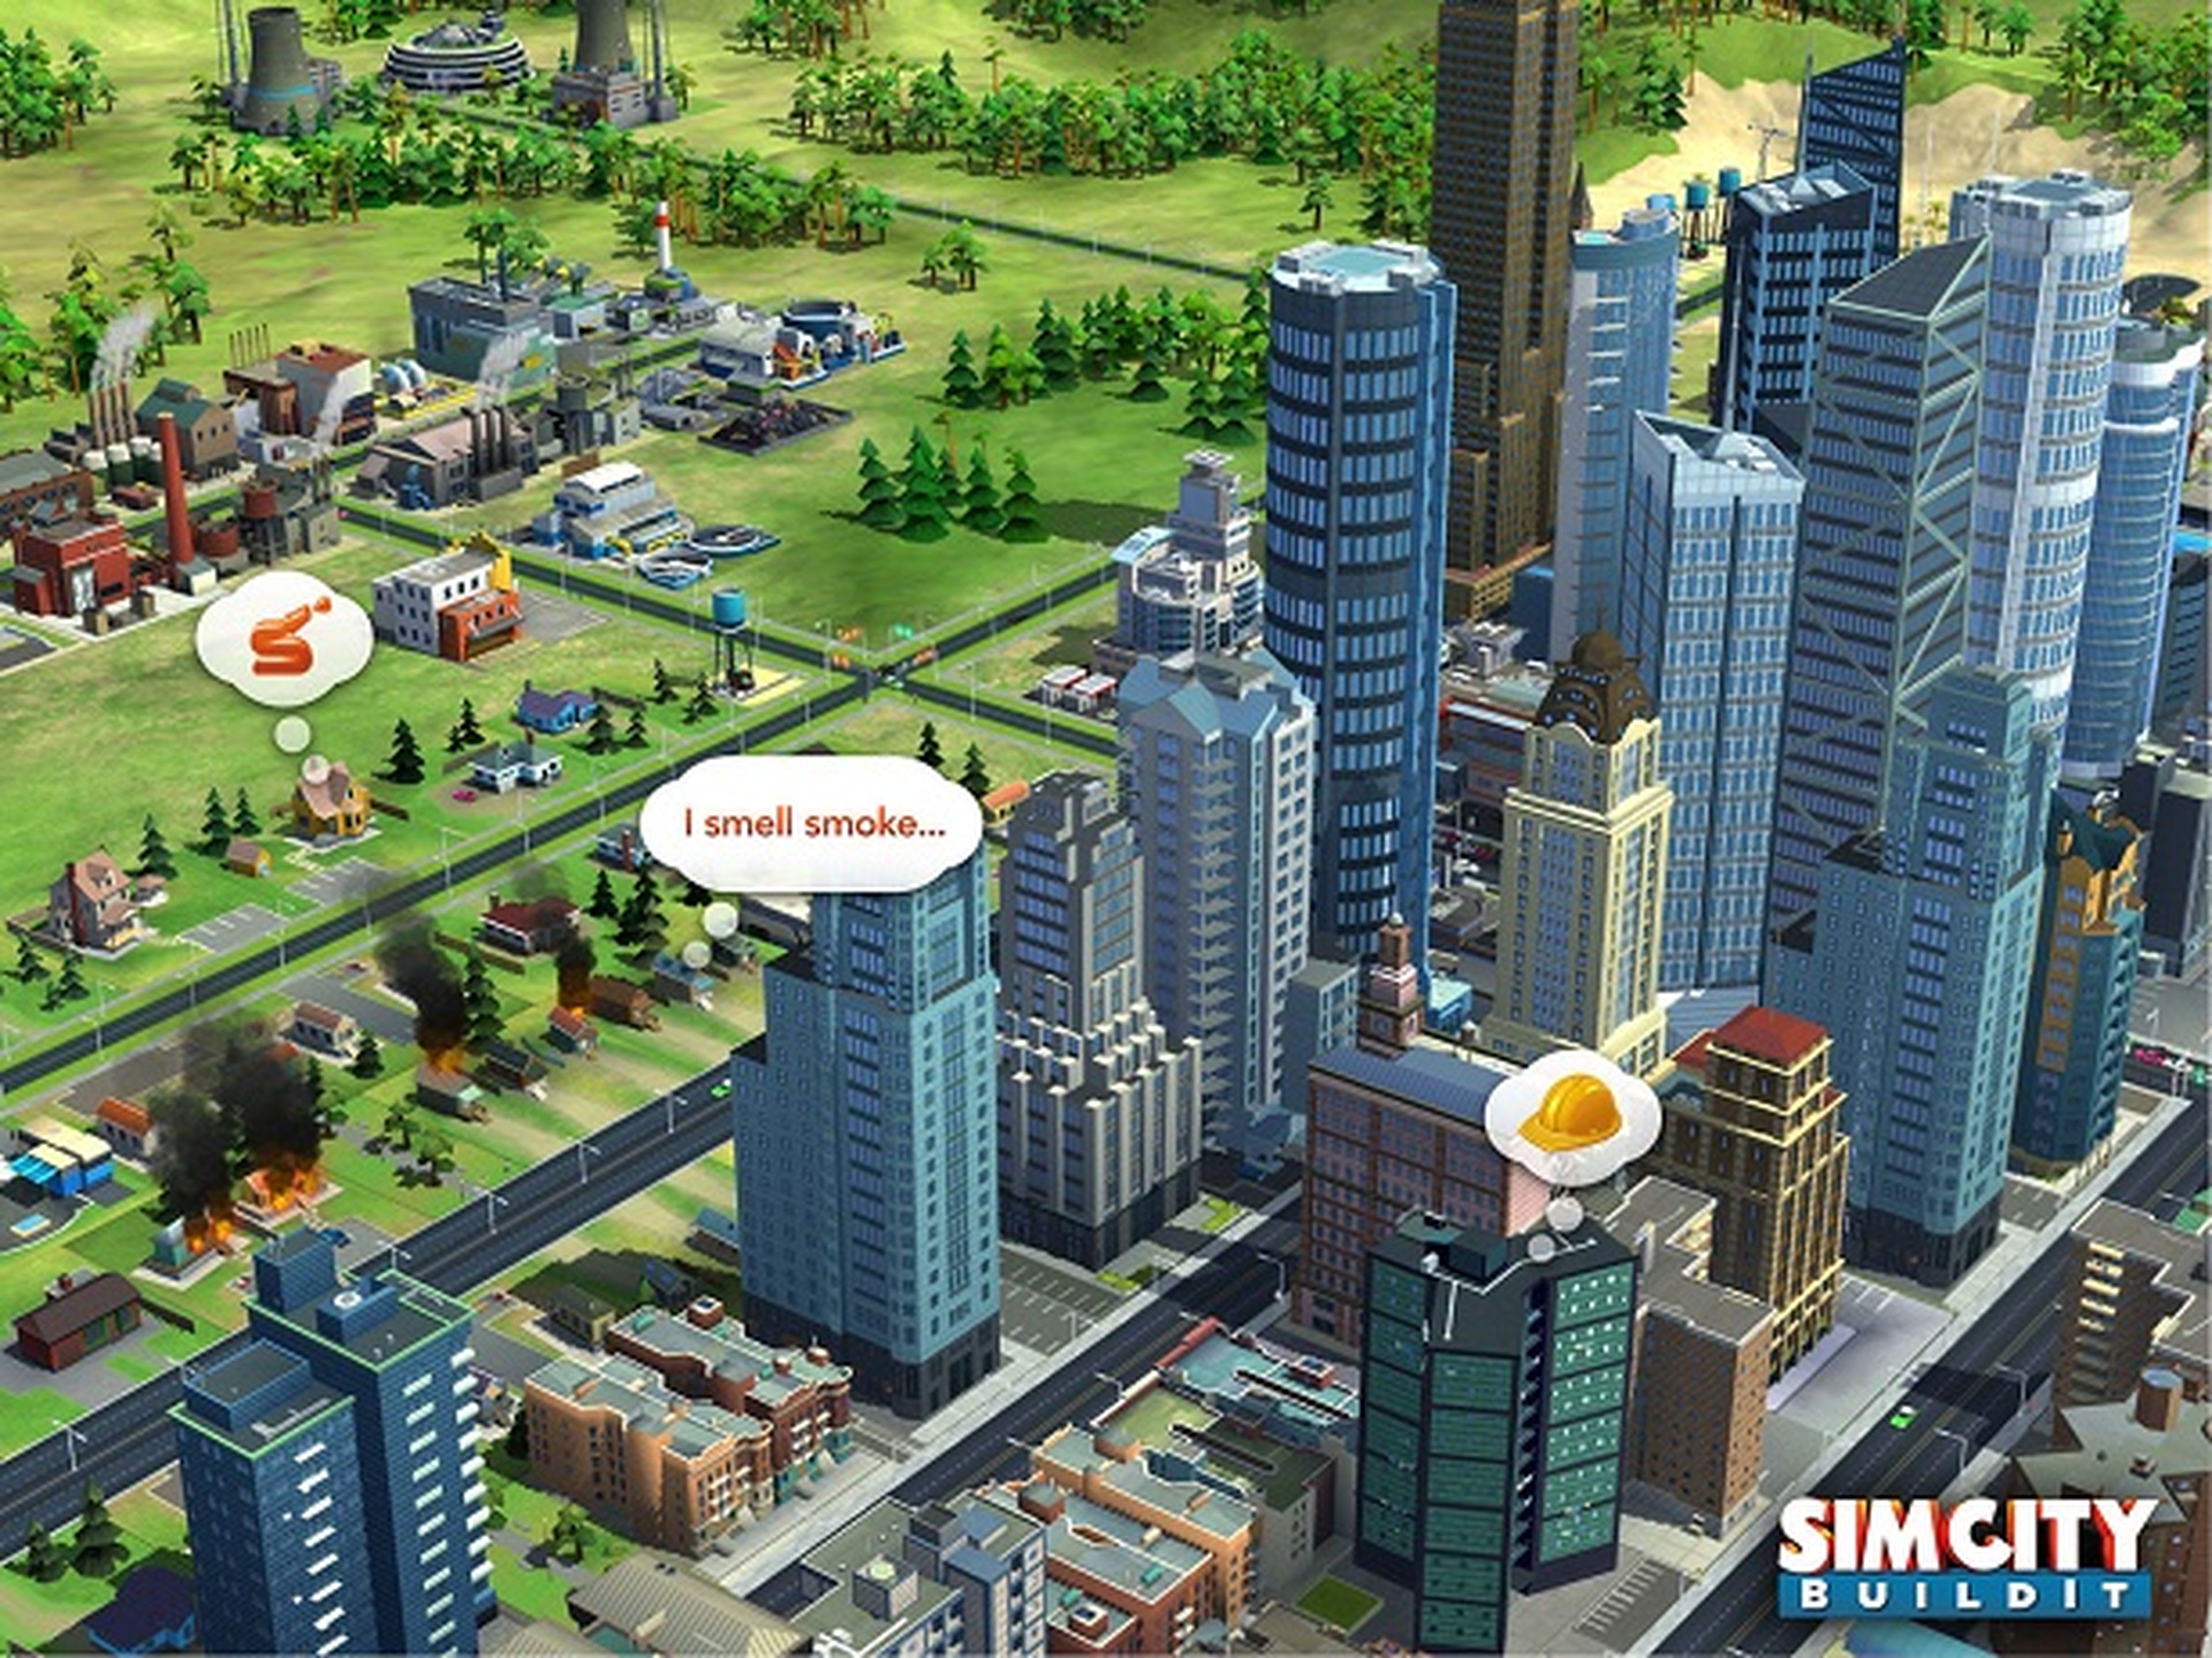 Electronic Arts anuncia SimCity BuildIt para móviles